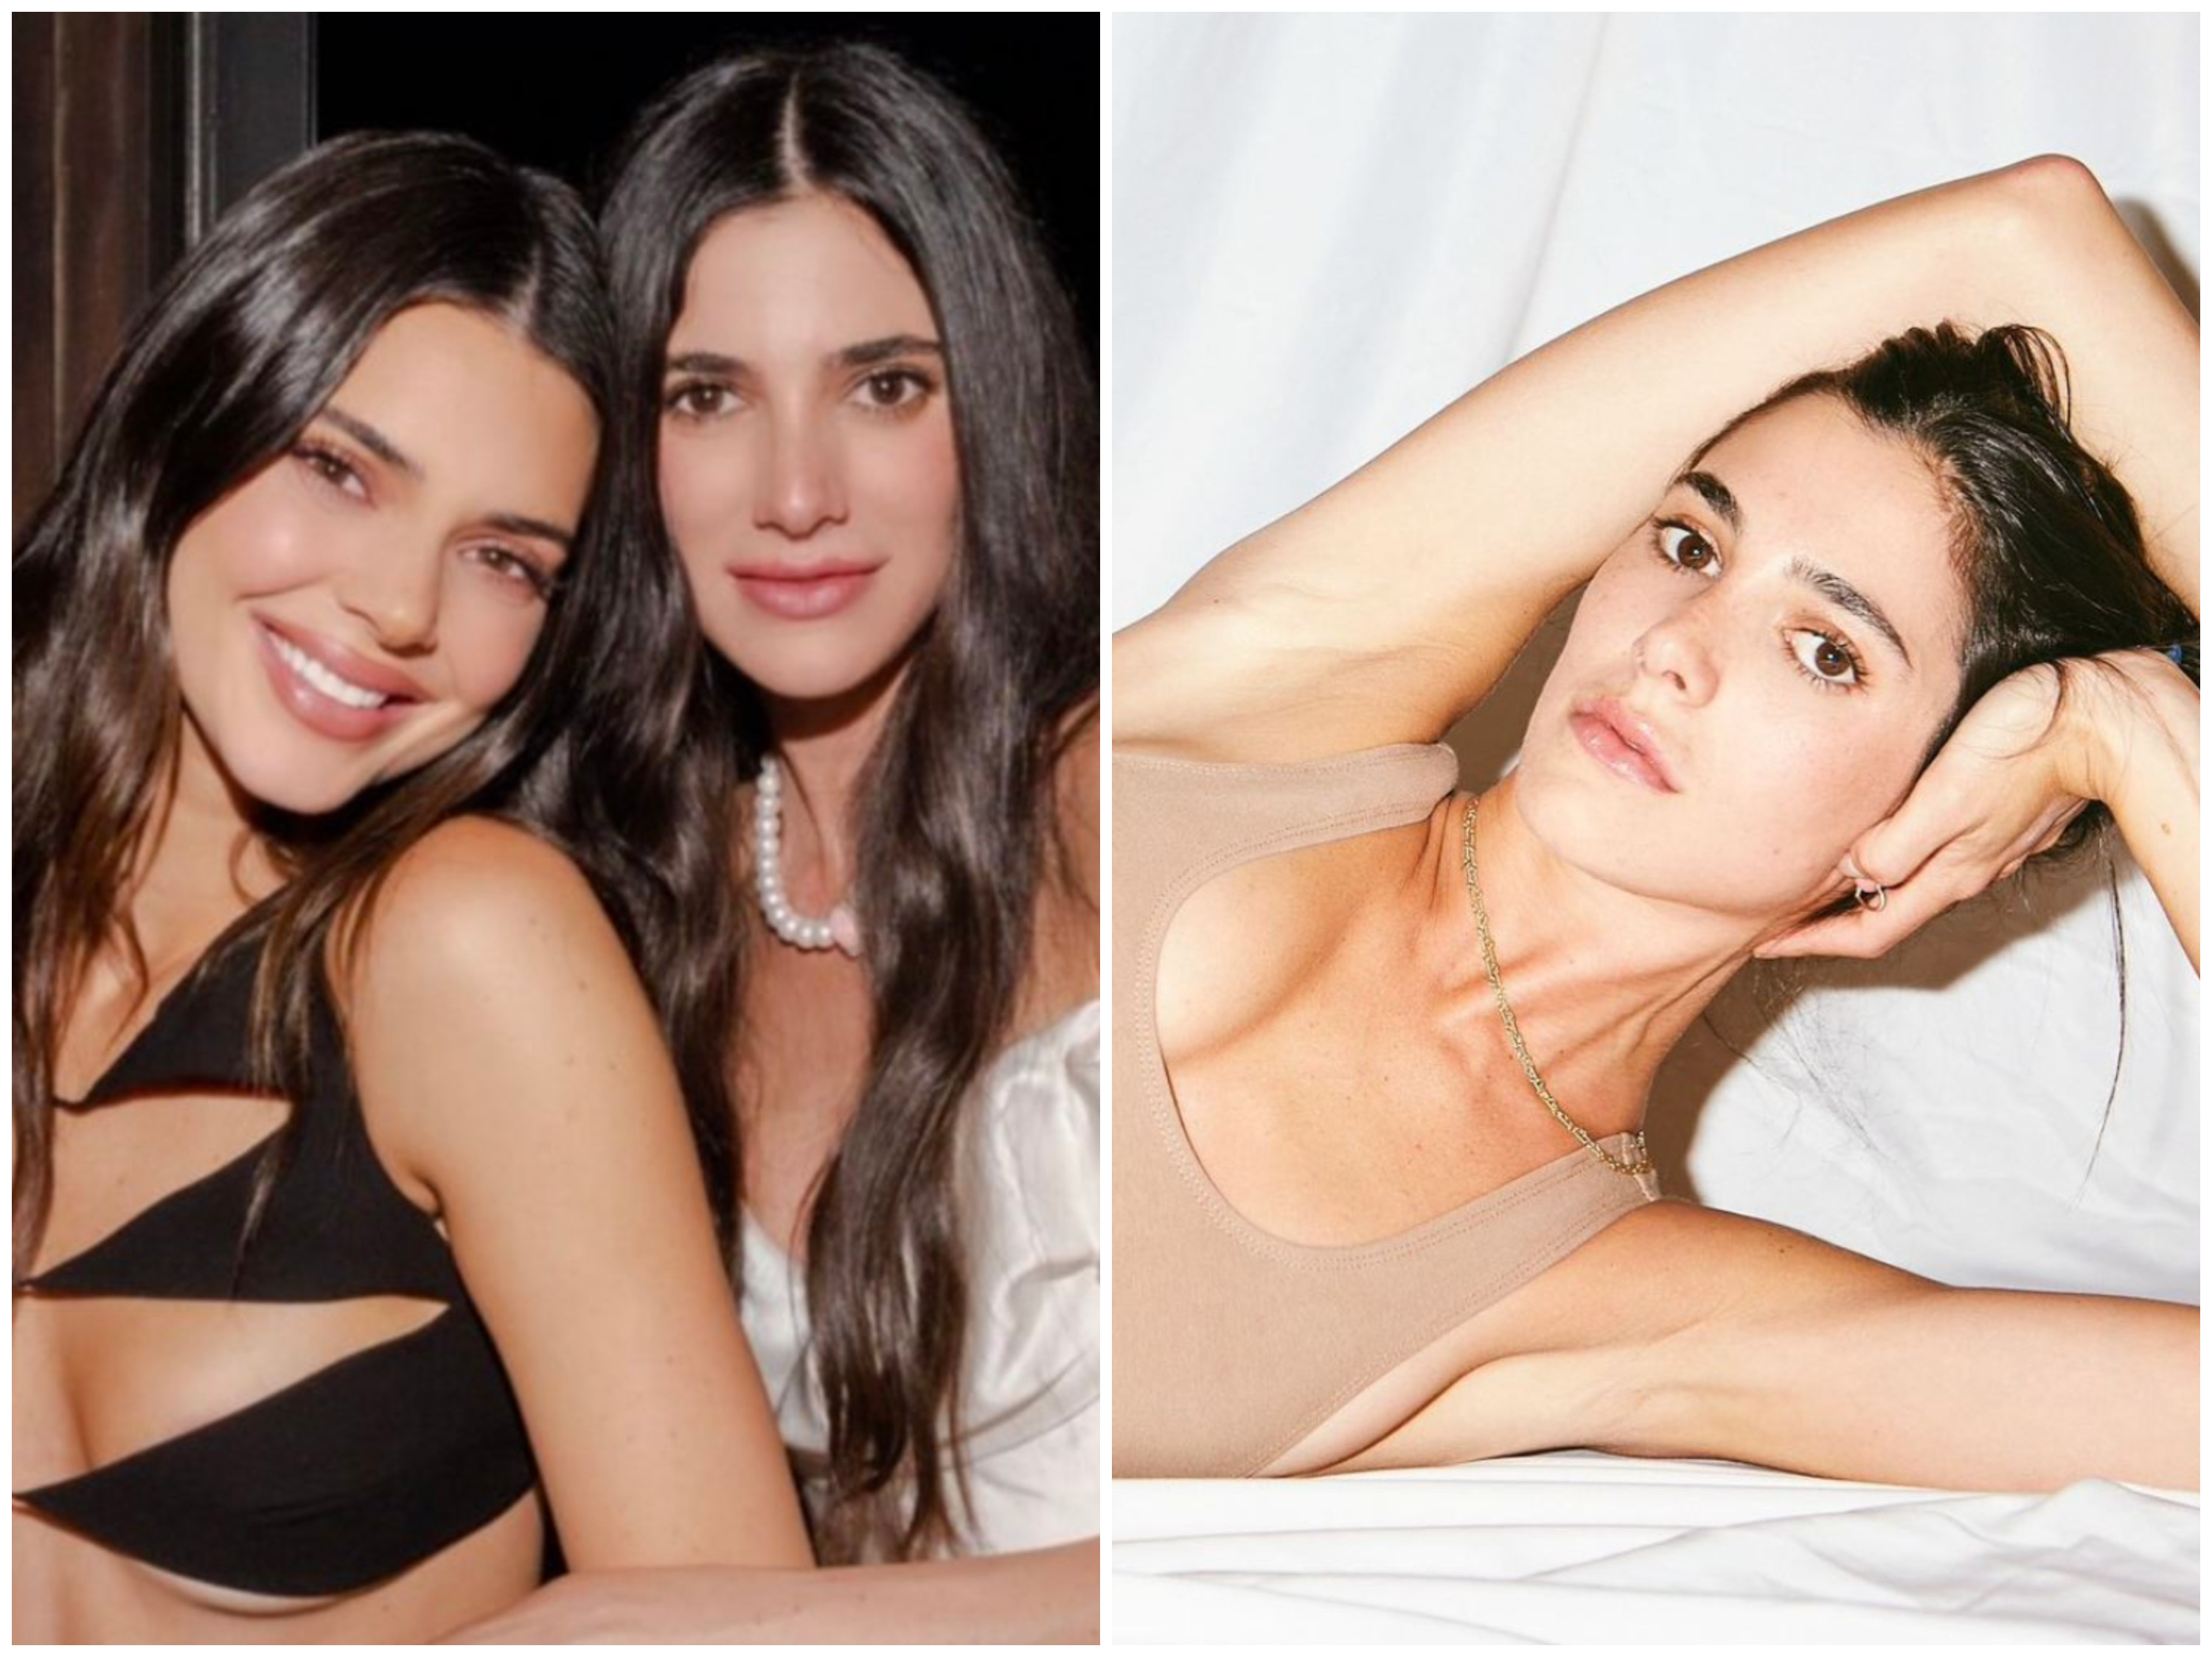 Lauren Perez hangs out with fashion’s biggest influencers, including Kendall Jenner. Photos: @ariaisadora, @laurenperez/Instagram